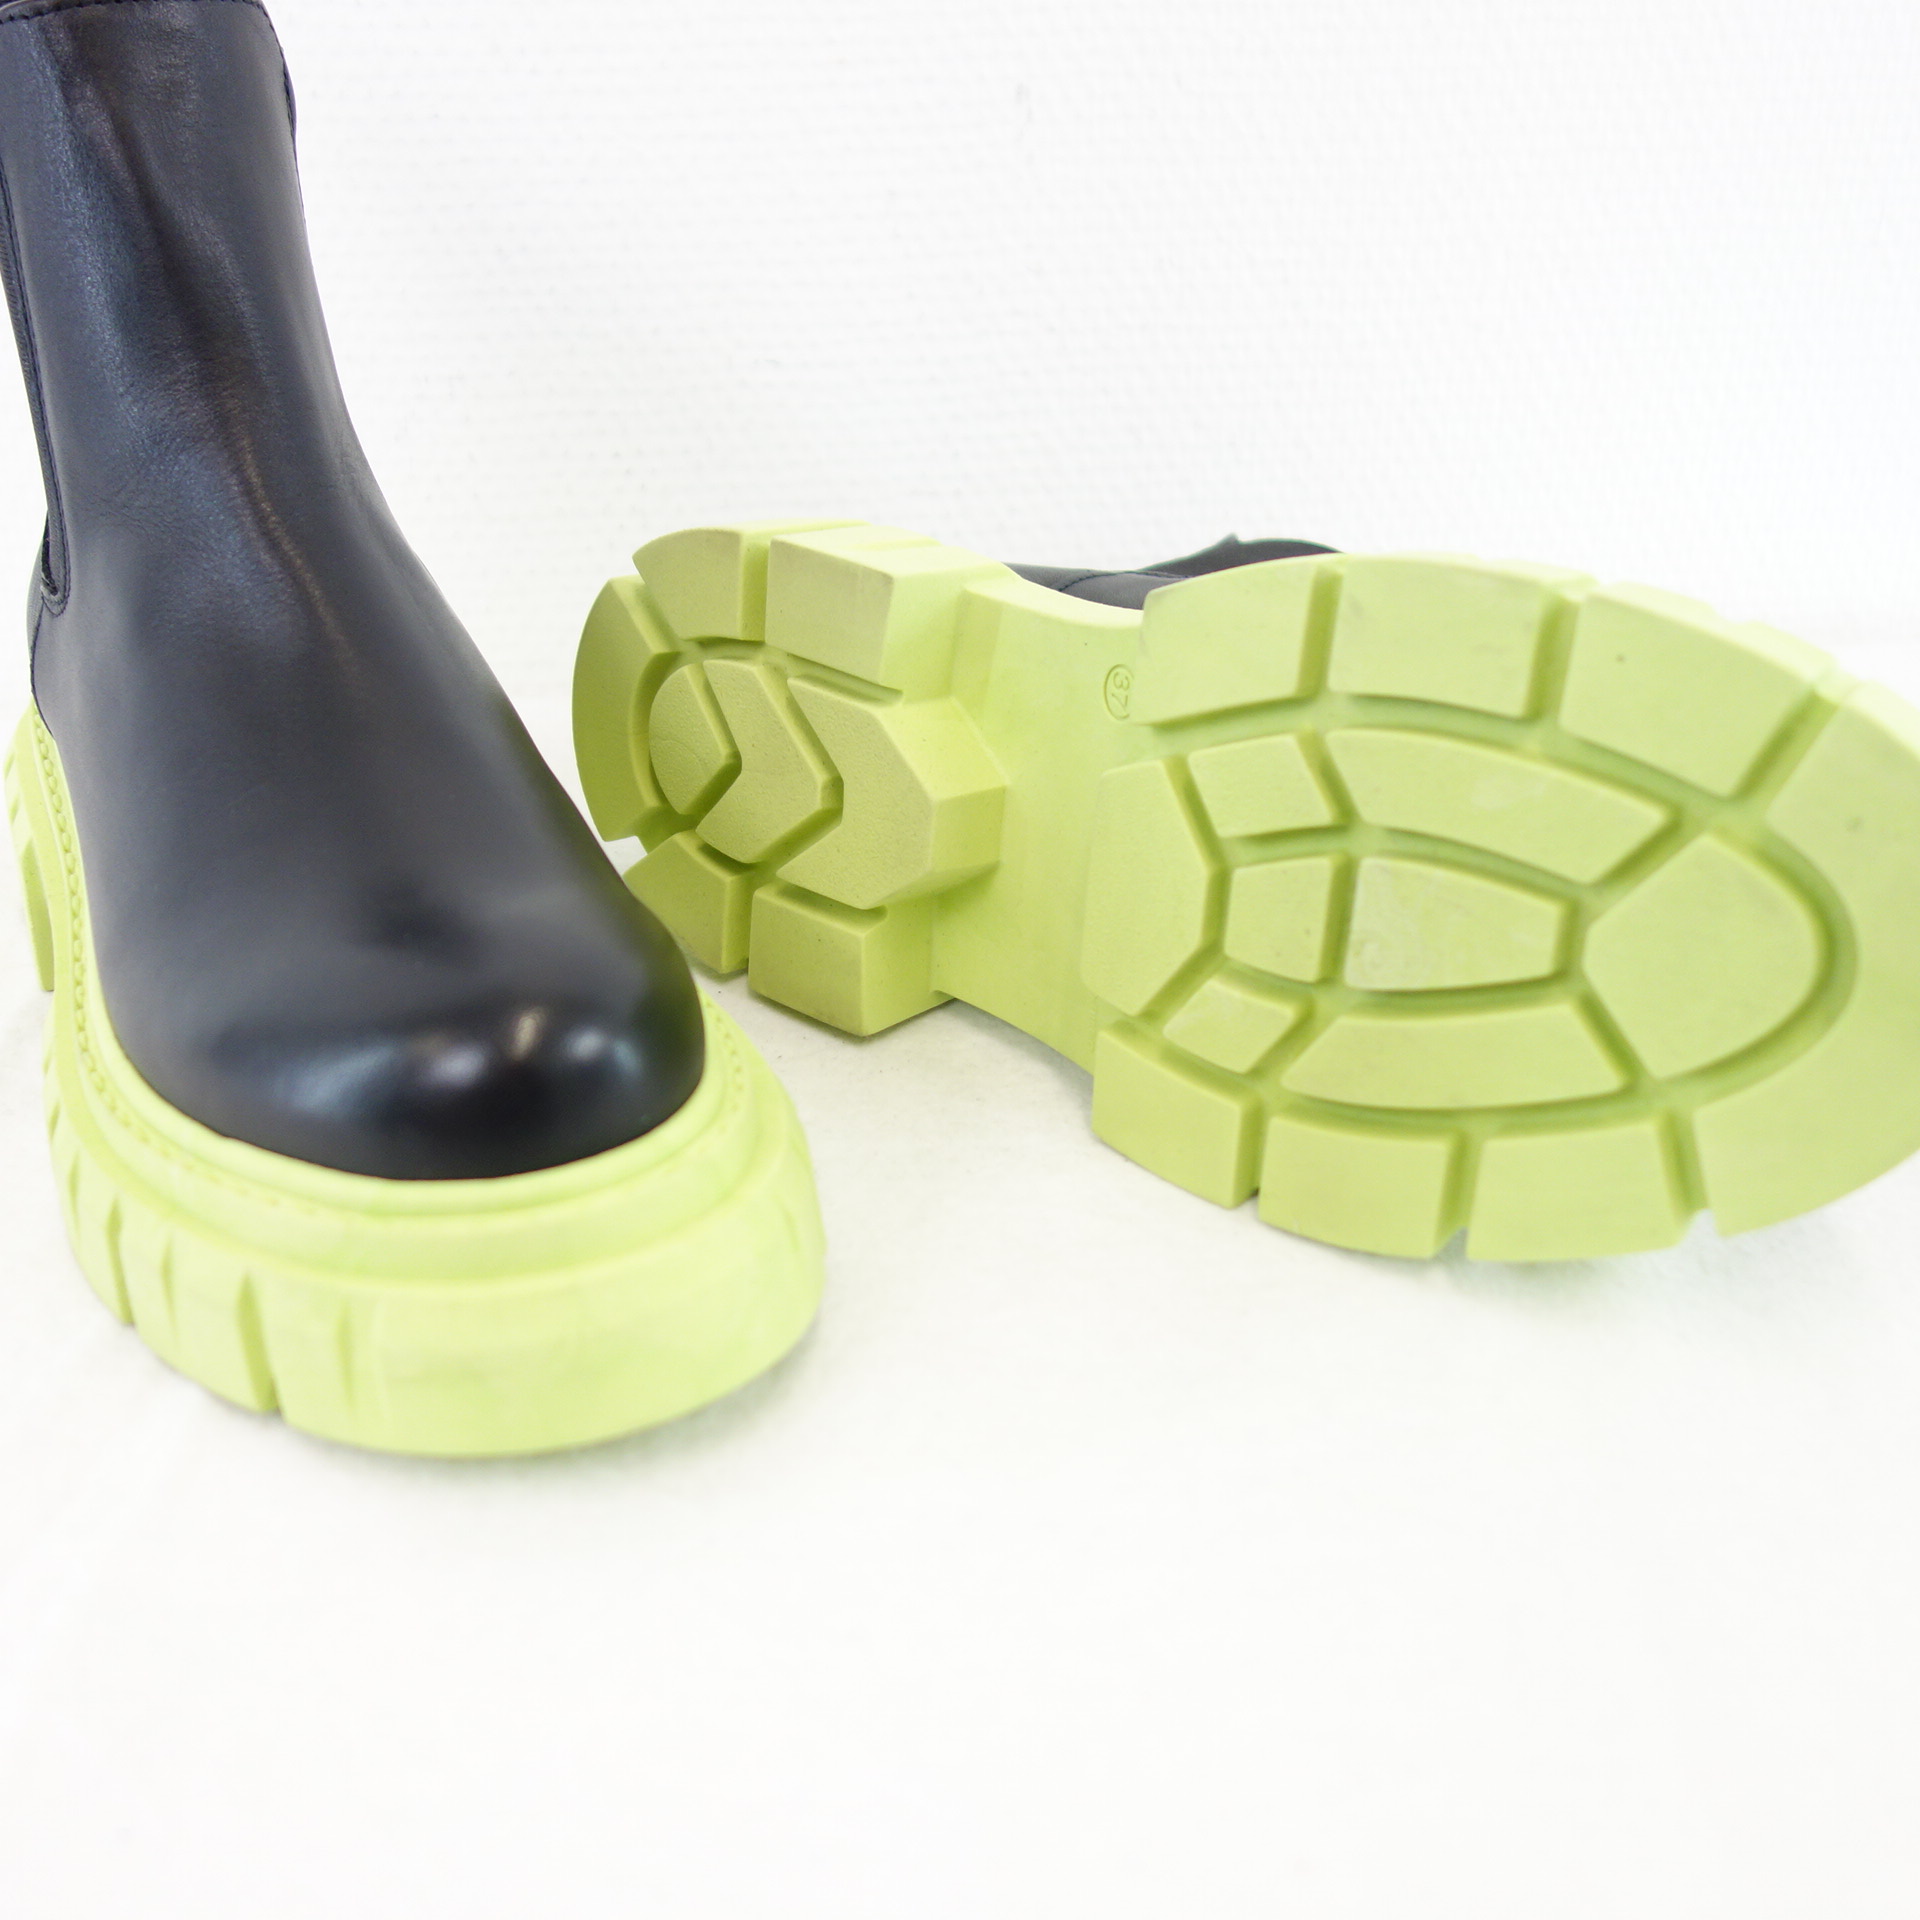 BUKELA Damen Schuhe Chelsea Boots Stiefel Stiefeletten Schwarz Grün Gr 37